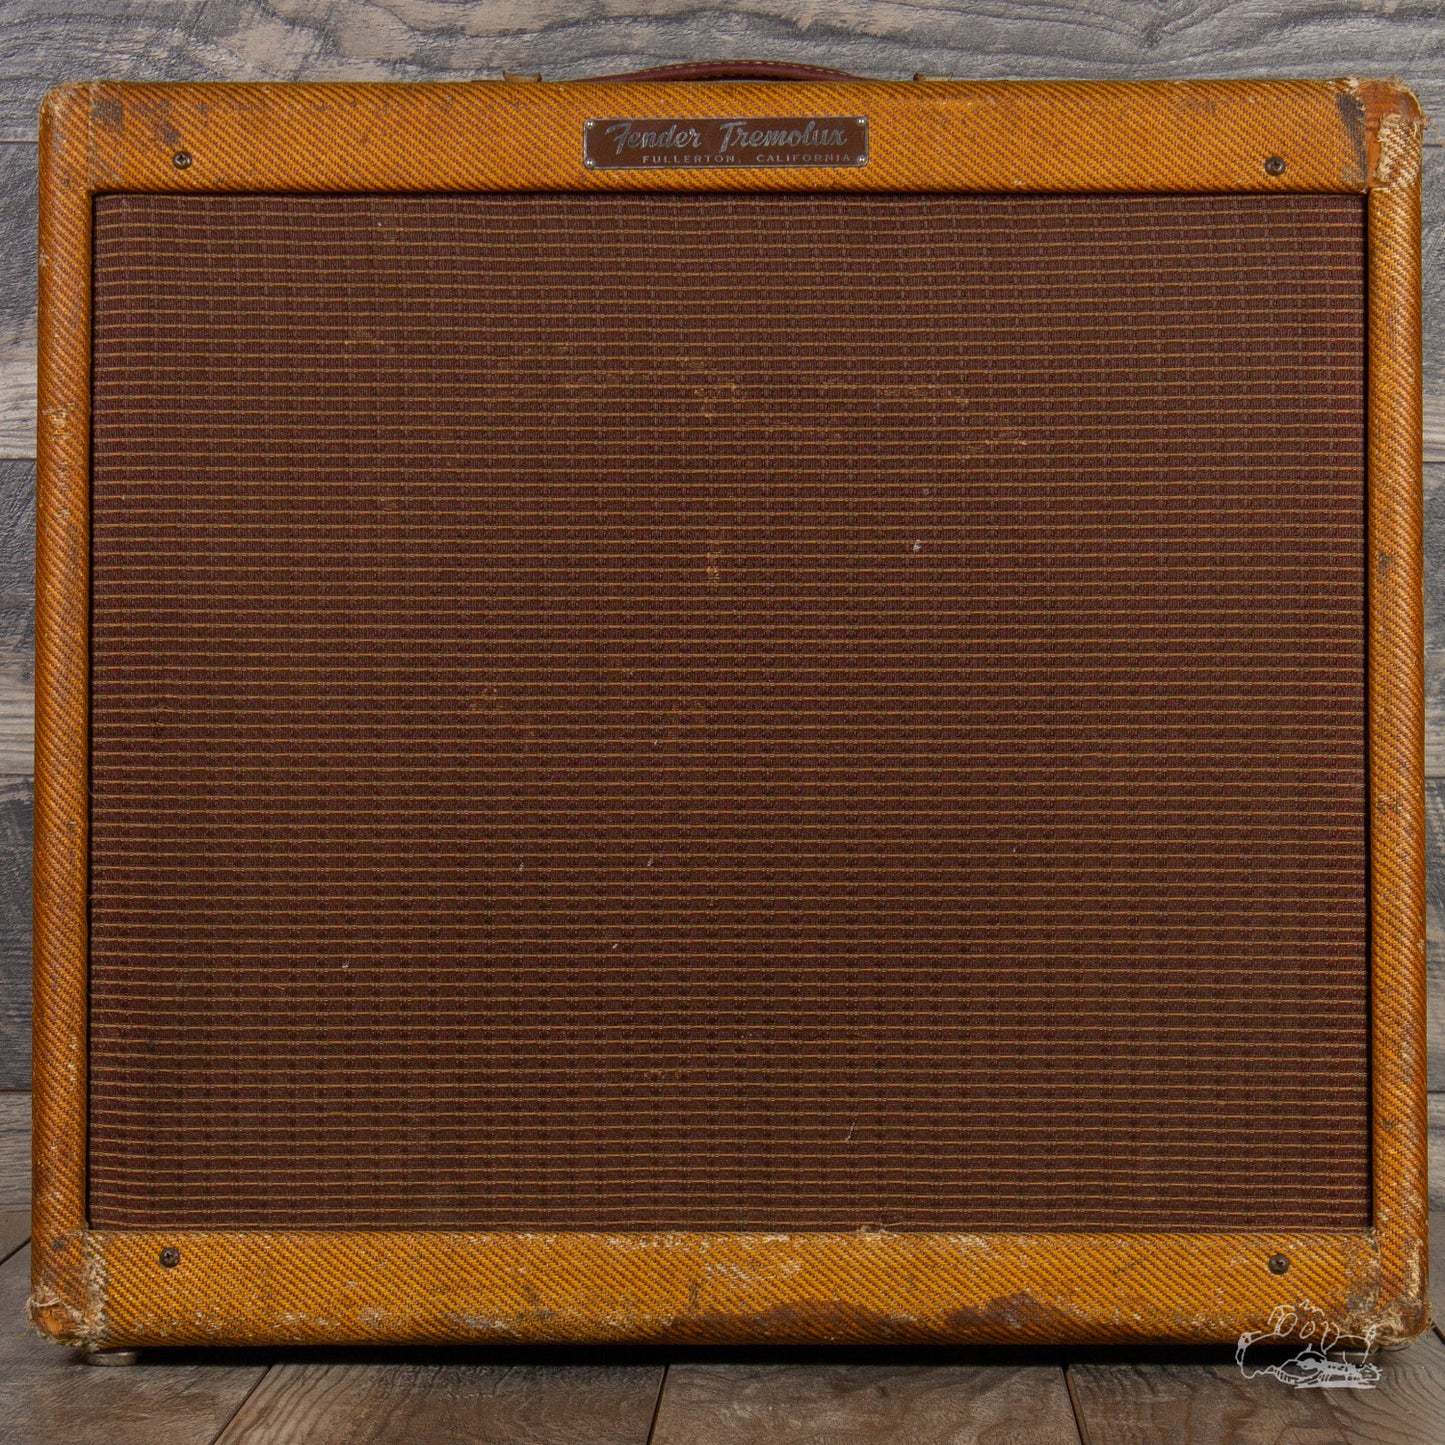 1960 Fender Tremolux